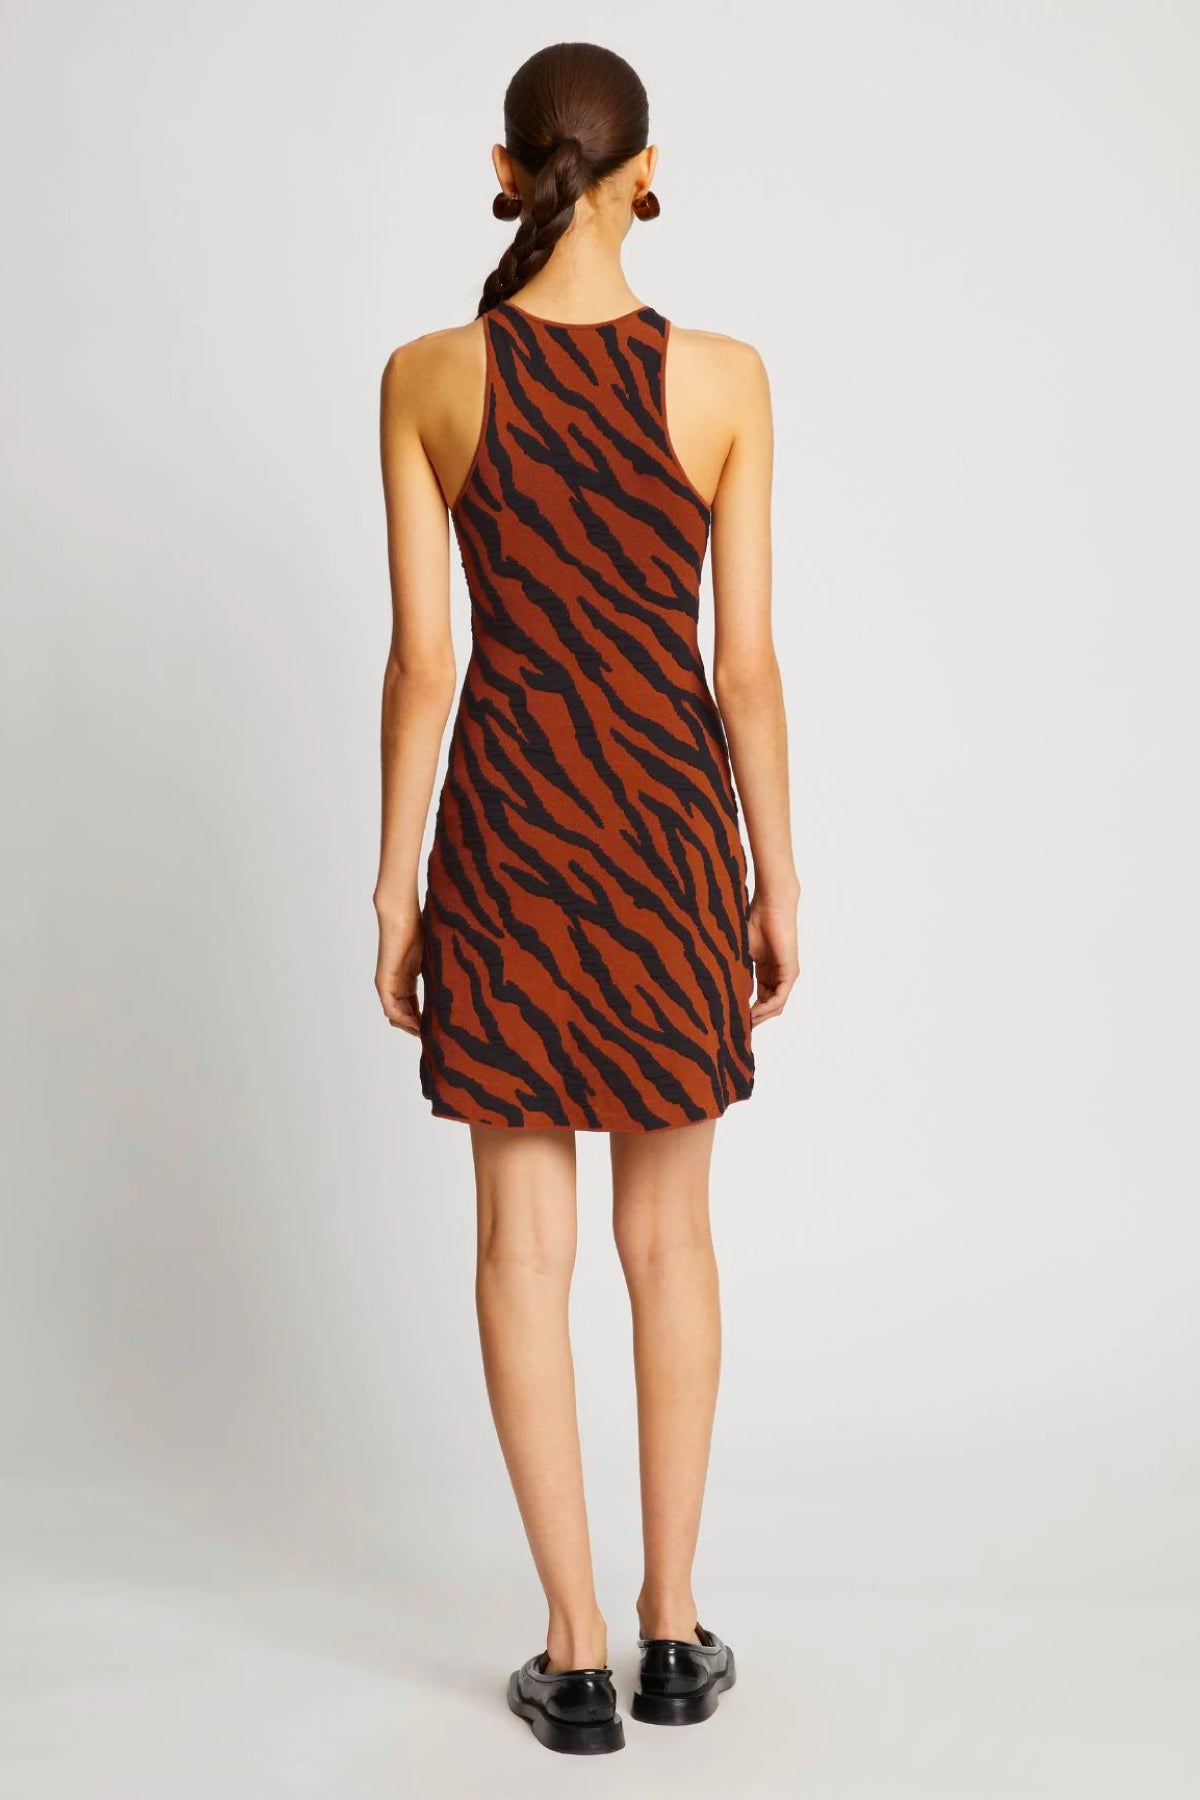 Proenza Schouler White Label Zebra Stripe Knit Dress - Honey/ Black